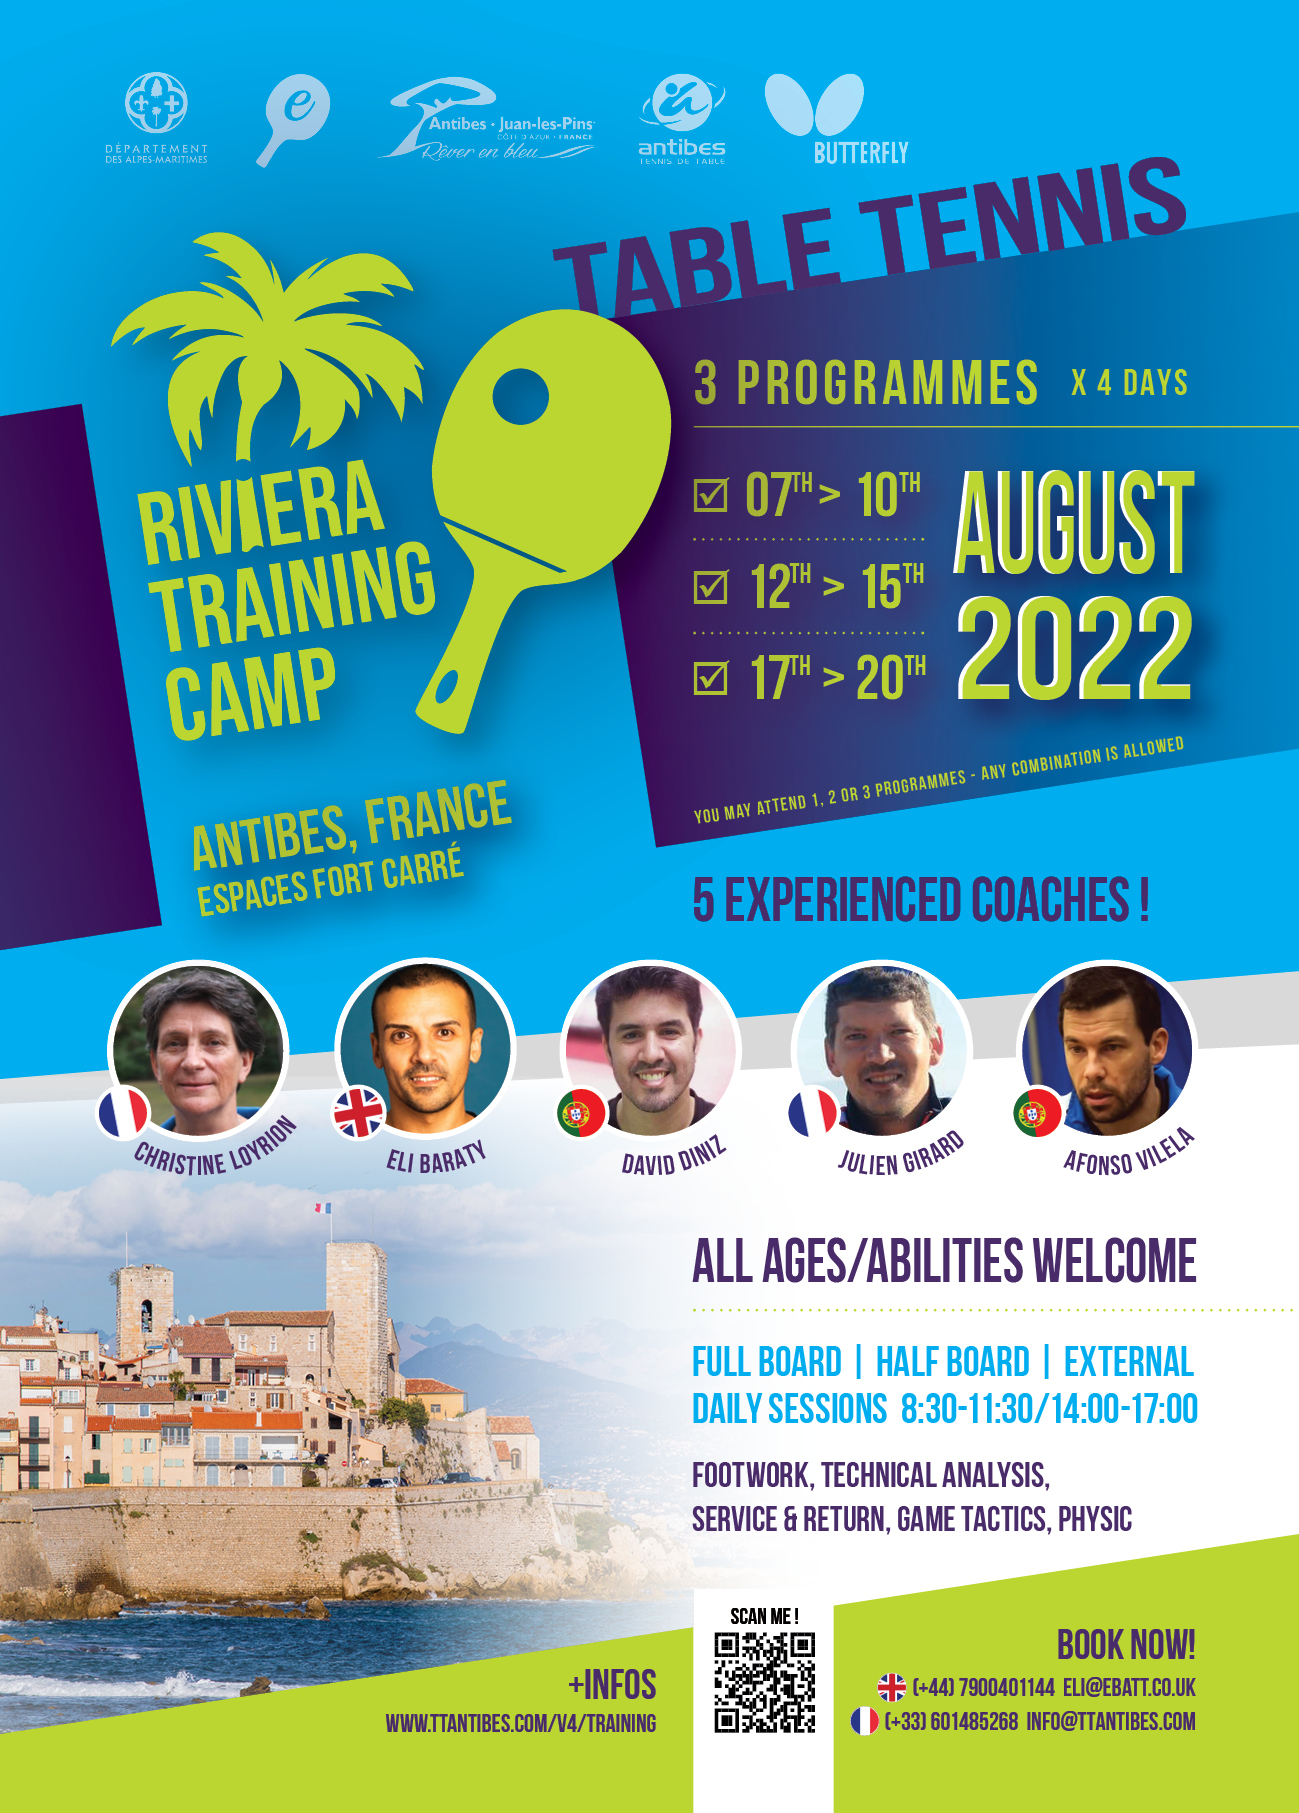 Riviera Table Tennis Training Camp | TableTennisDaily